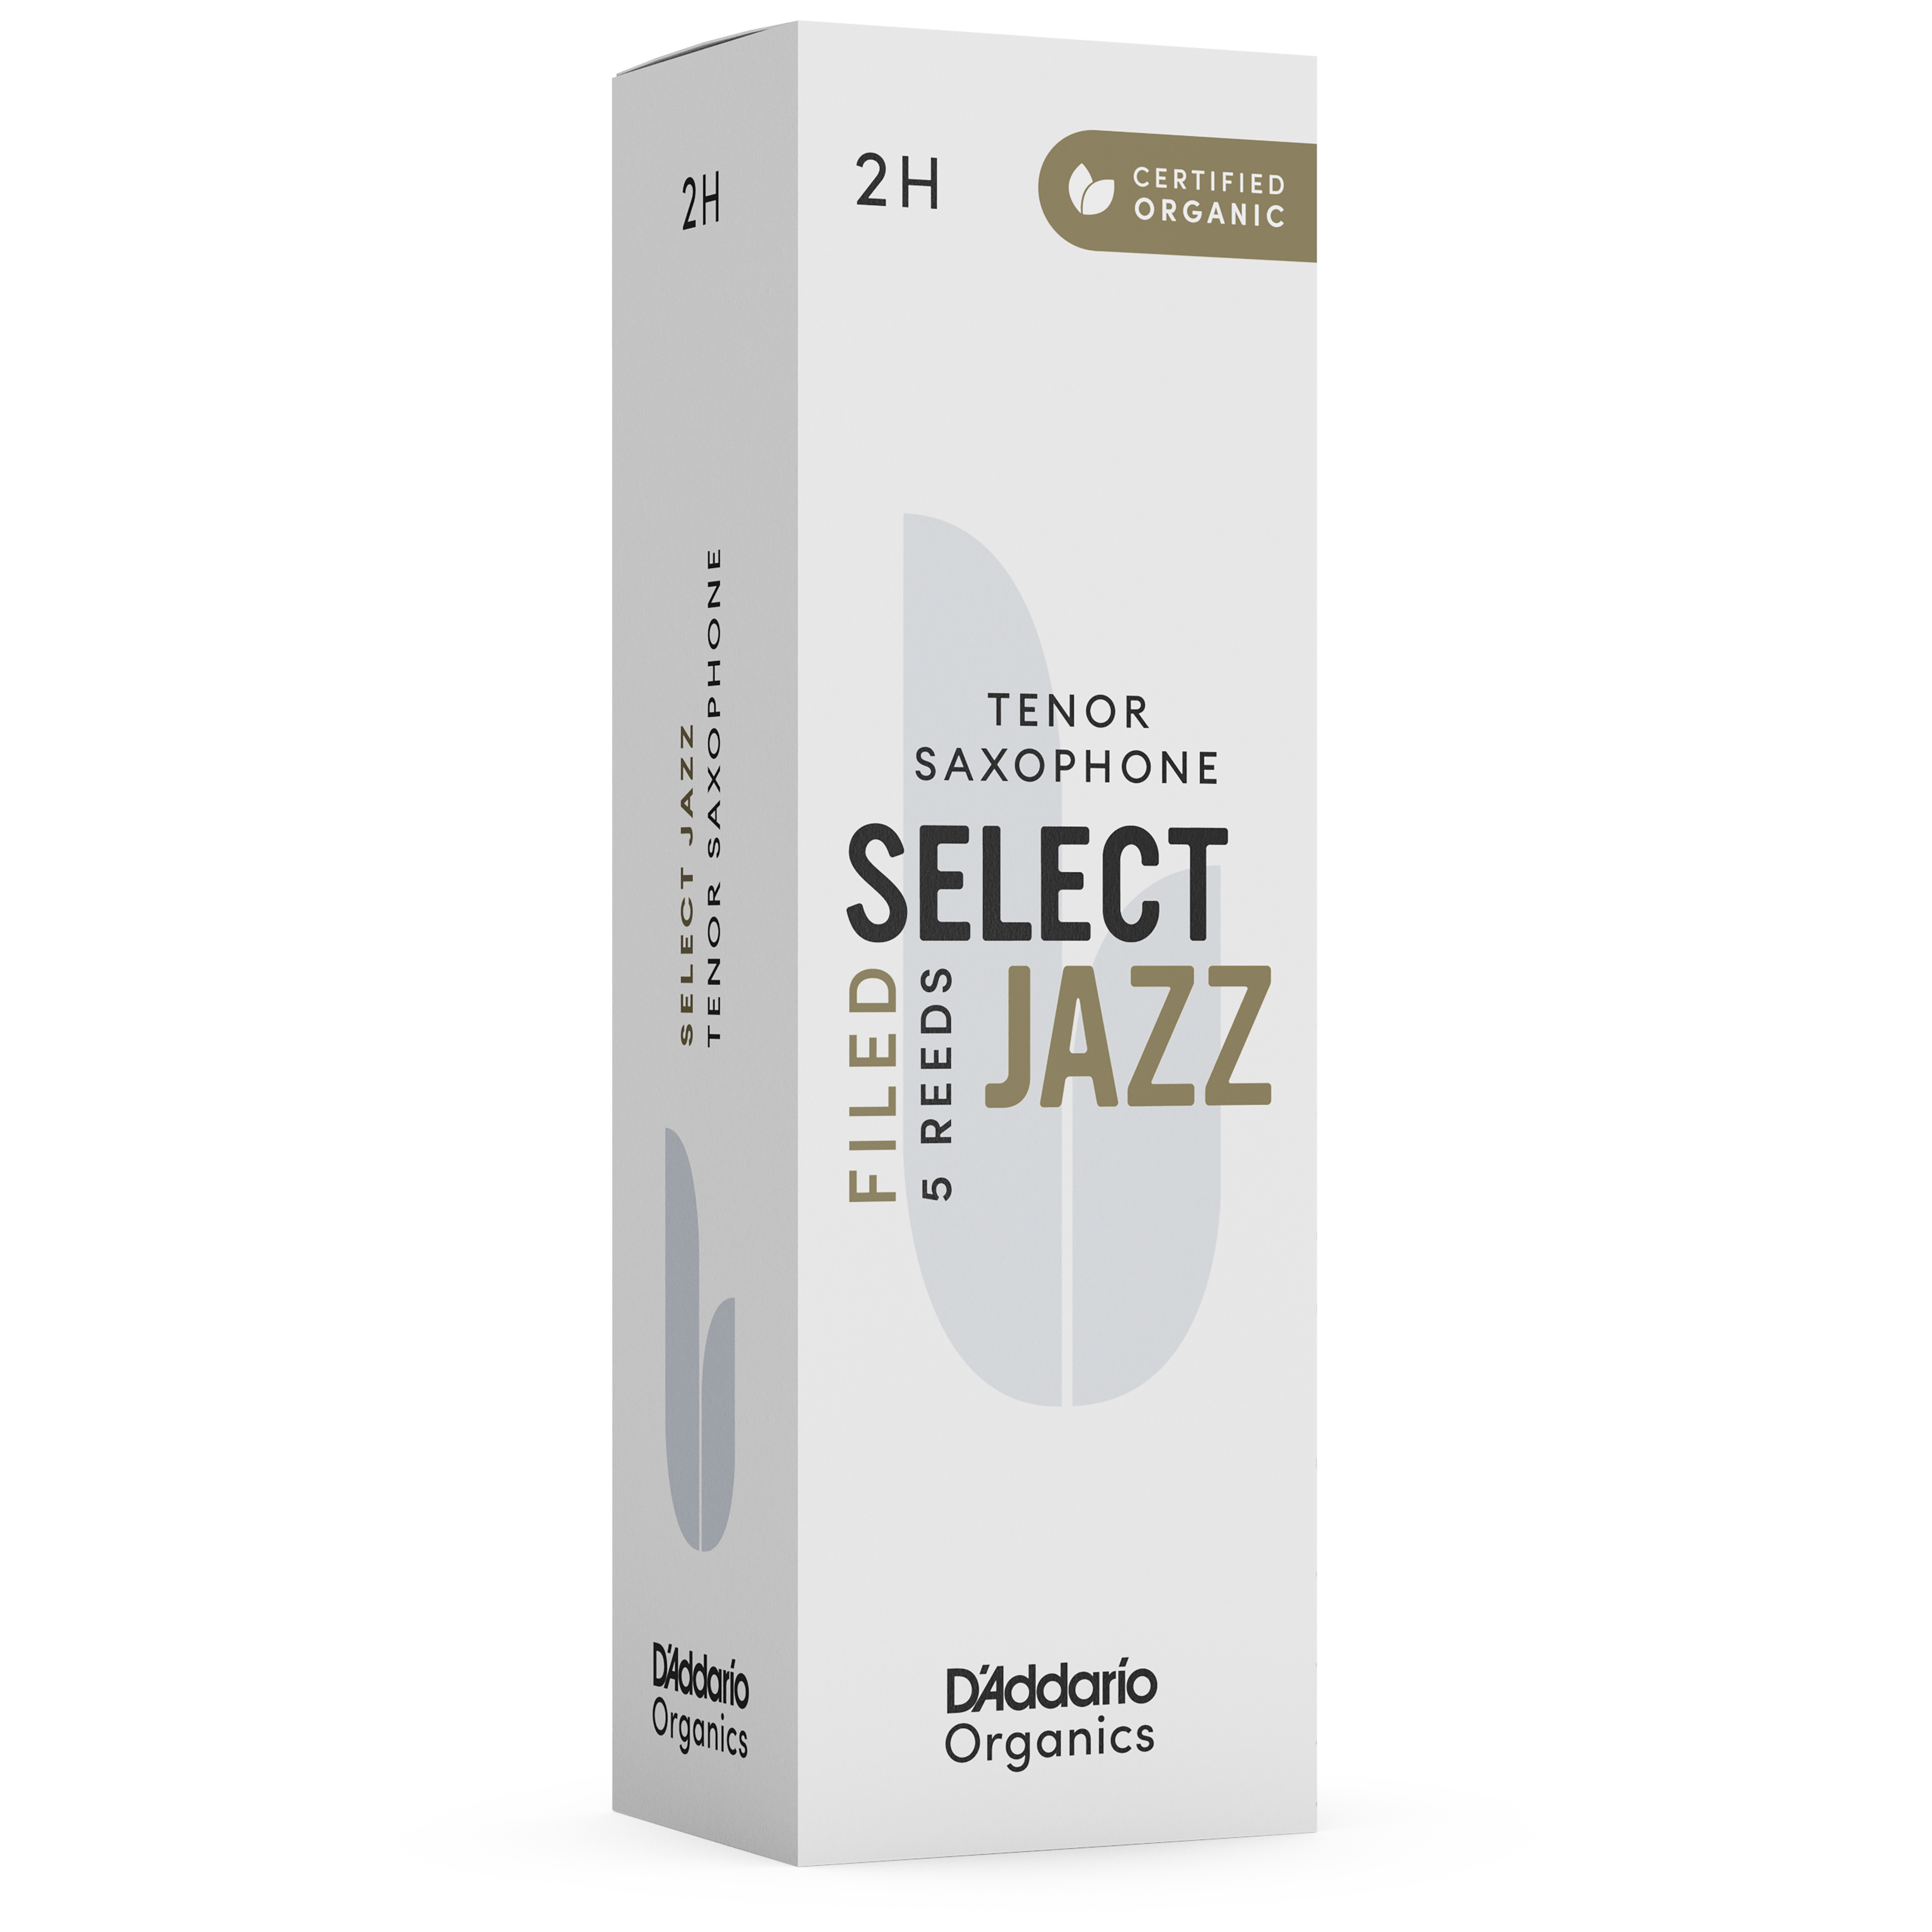 D’Addario Woodwinds Organic Select Jazz Filed - Tenor Saxophone 2H - 5er Pack 3